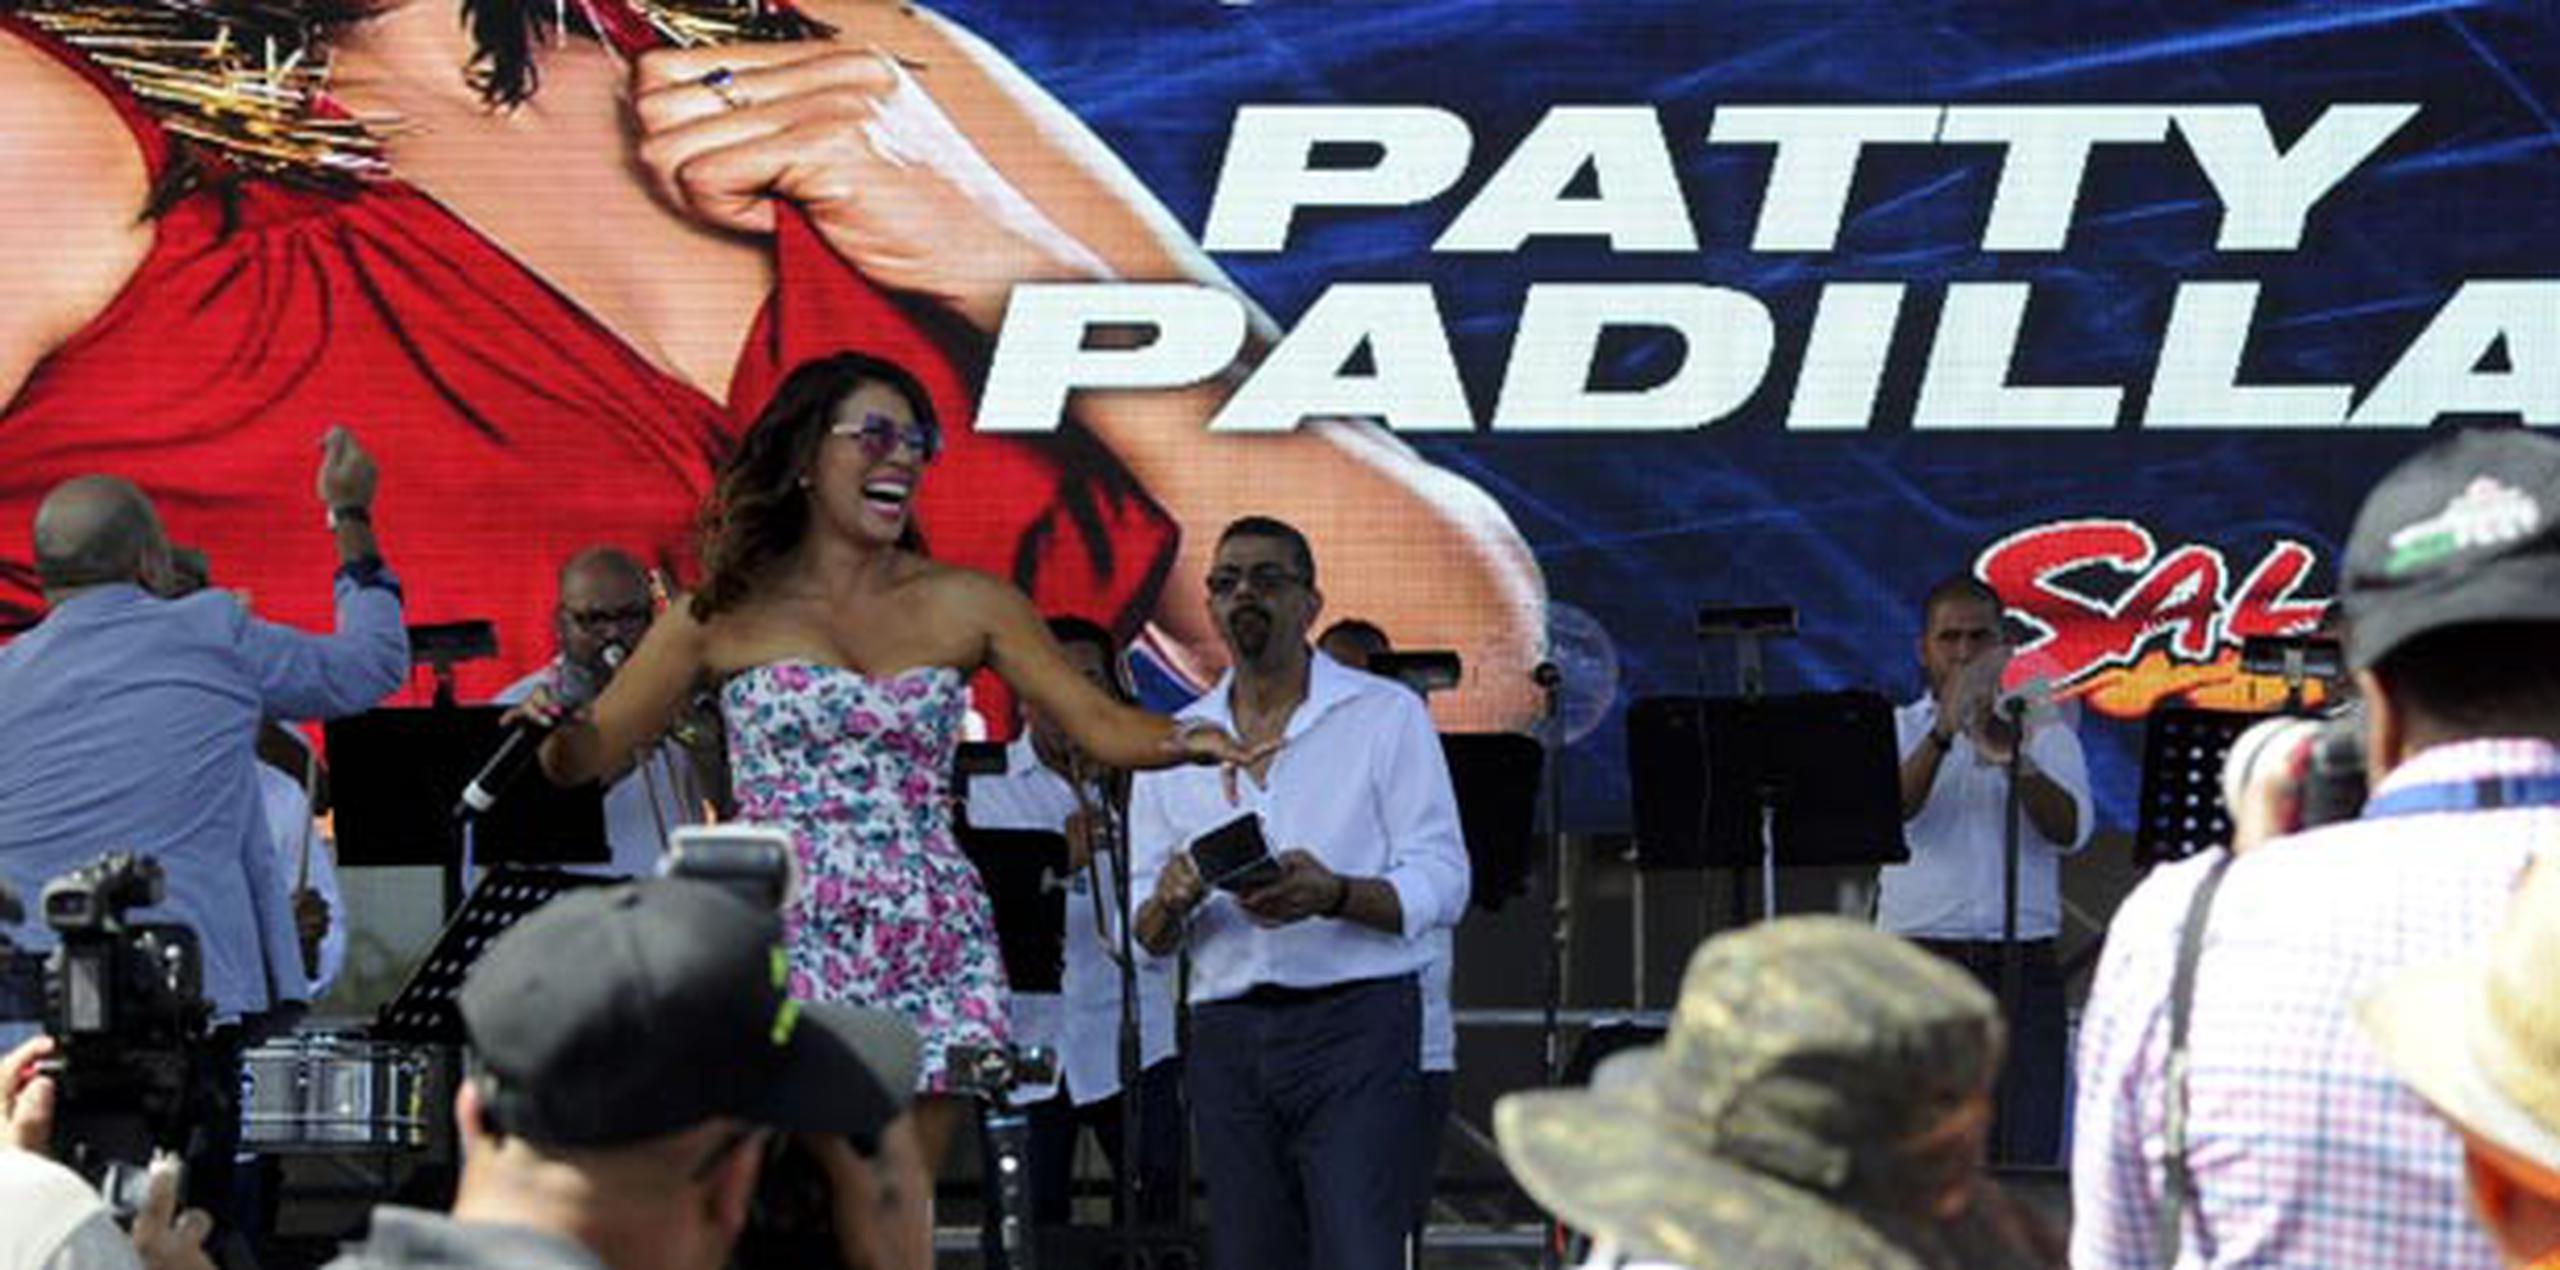 La colombiana Patty Padilla hizo un homenaje a Celia Cruz. (tony.zayas@gfrmedia.com)